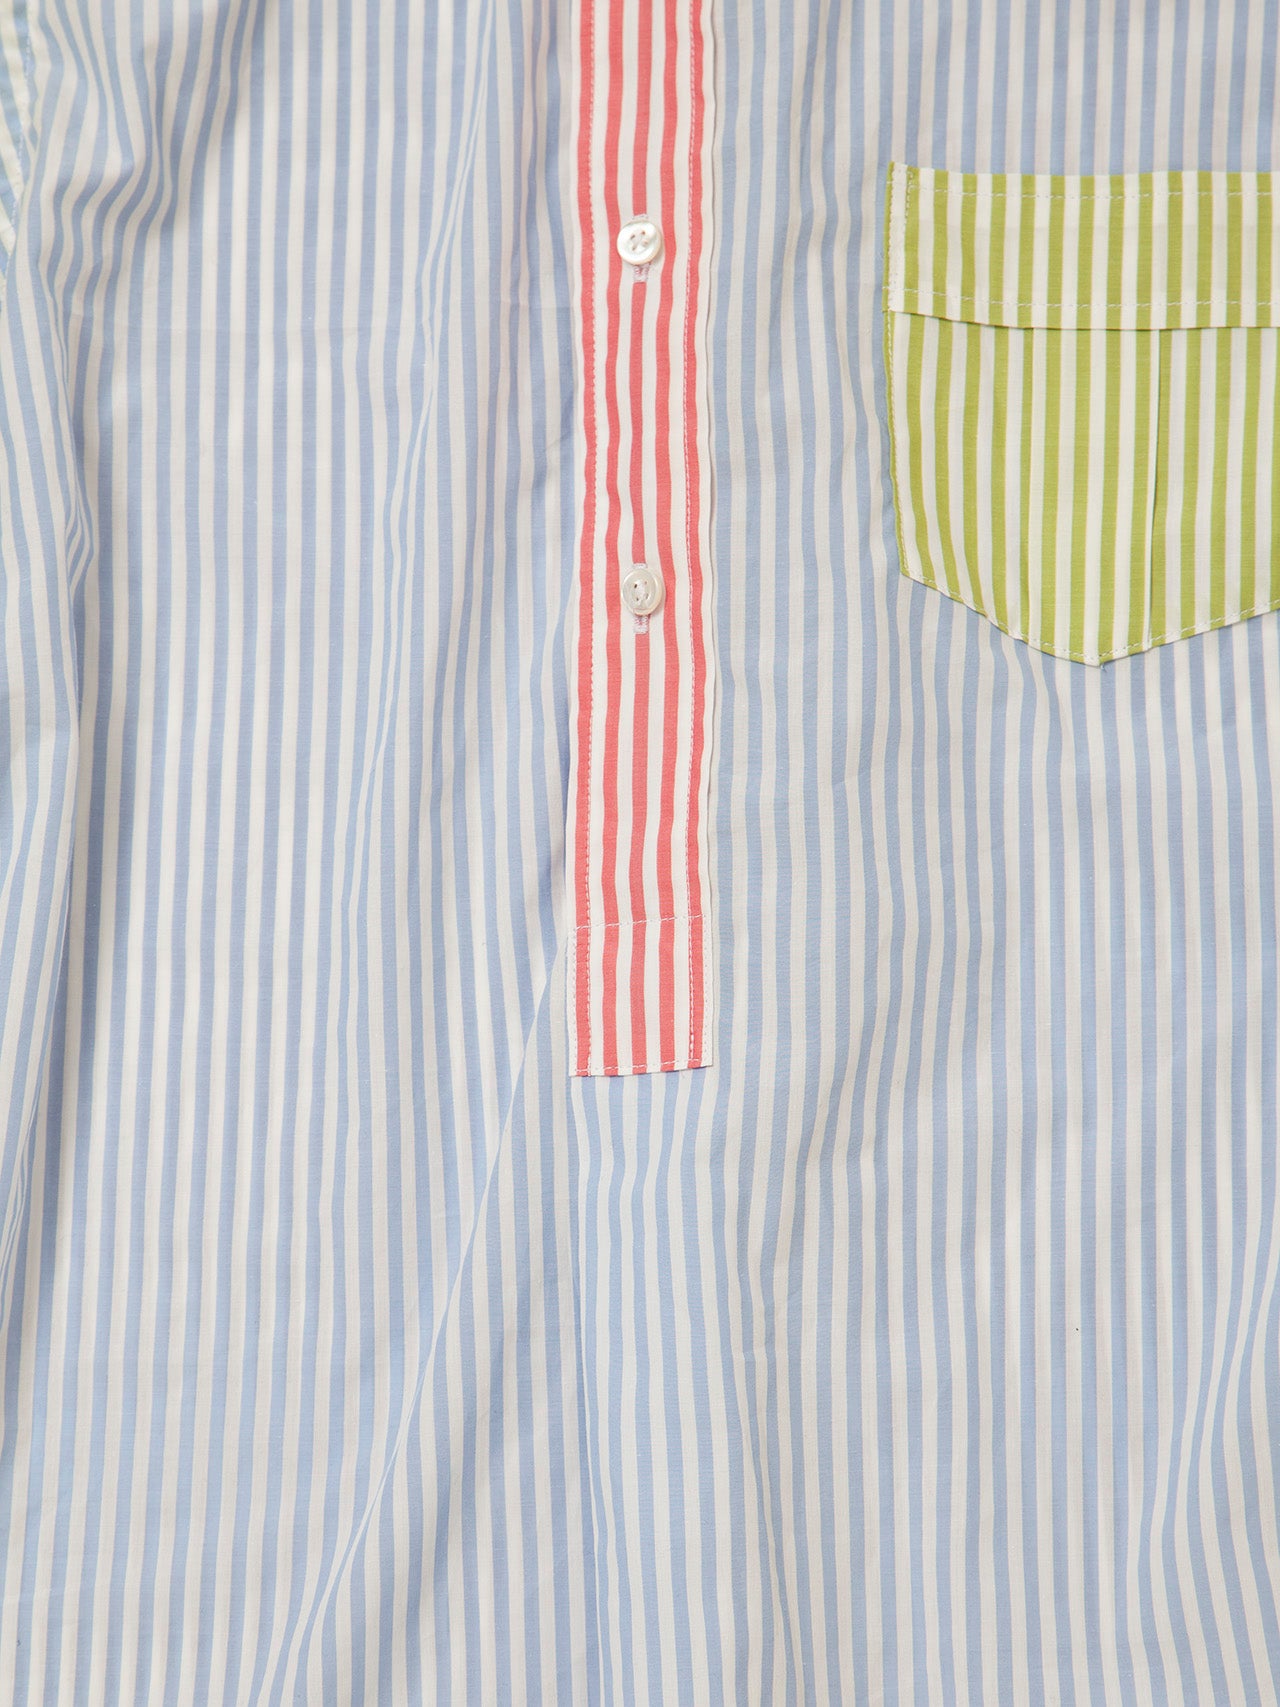 CS005 - CORONA・White Collar Work Shirt / Stripe Broadcloth - Crazy Pattern